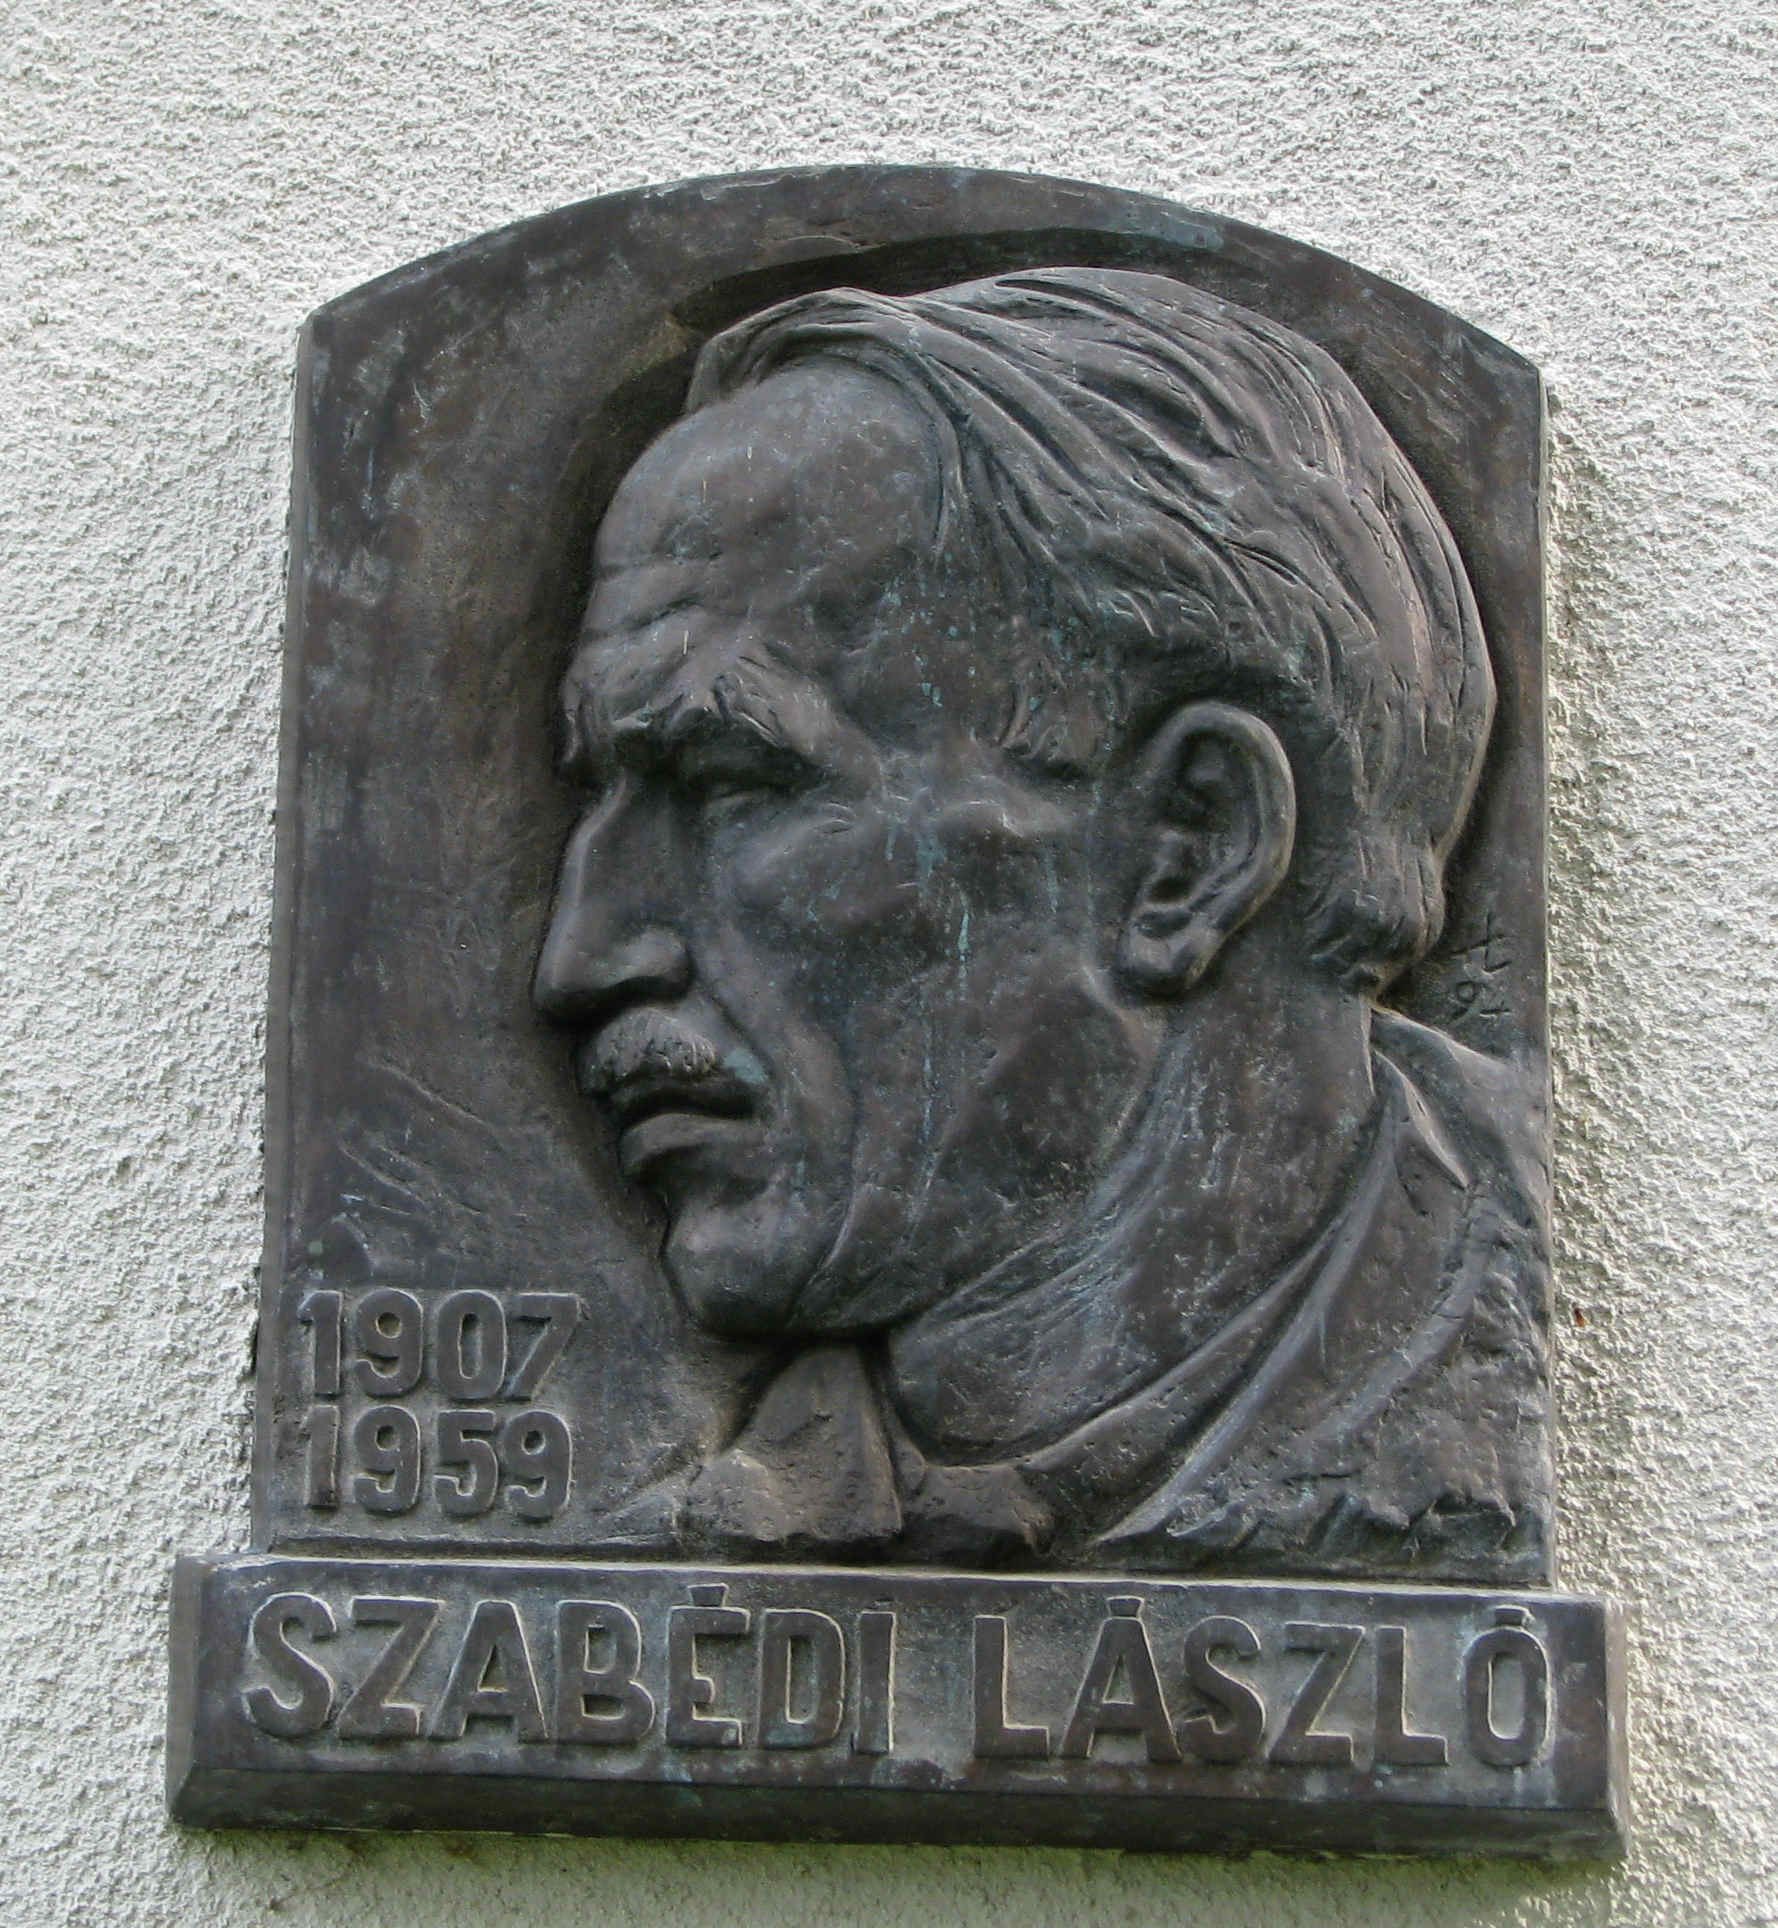 Plaque of László Szabédi on the wall of the unitarian temple at Szabéd, 2011.